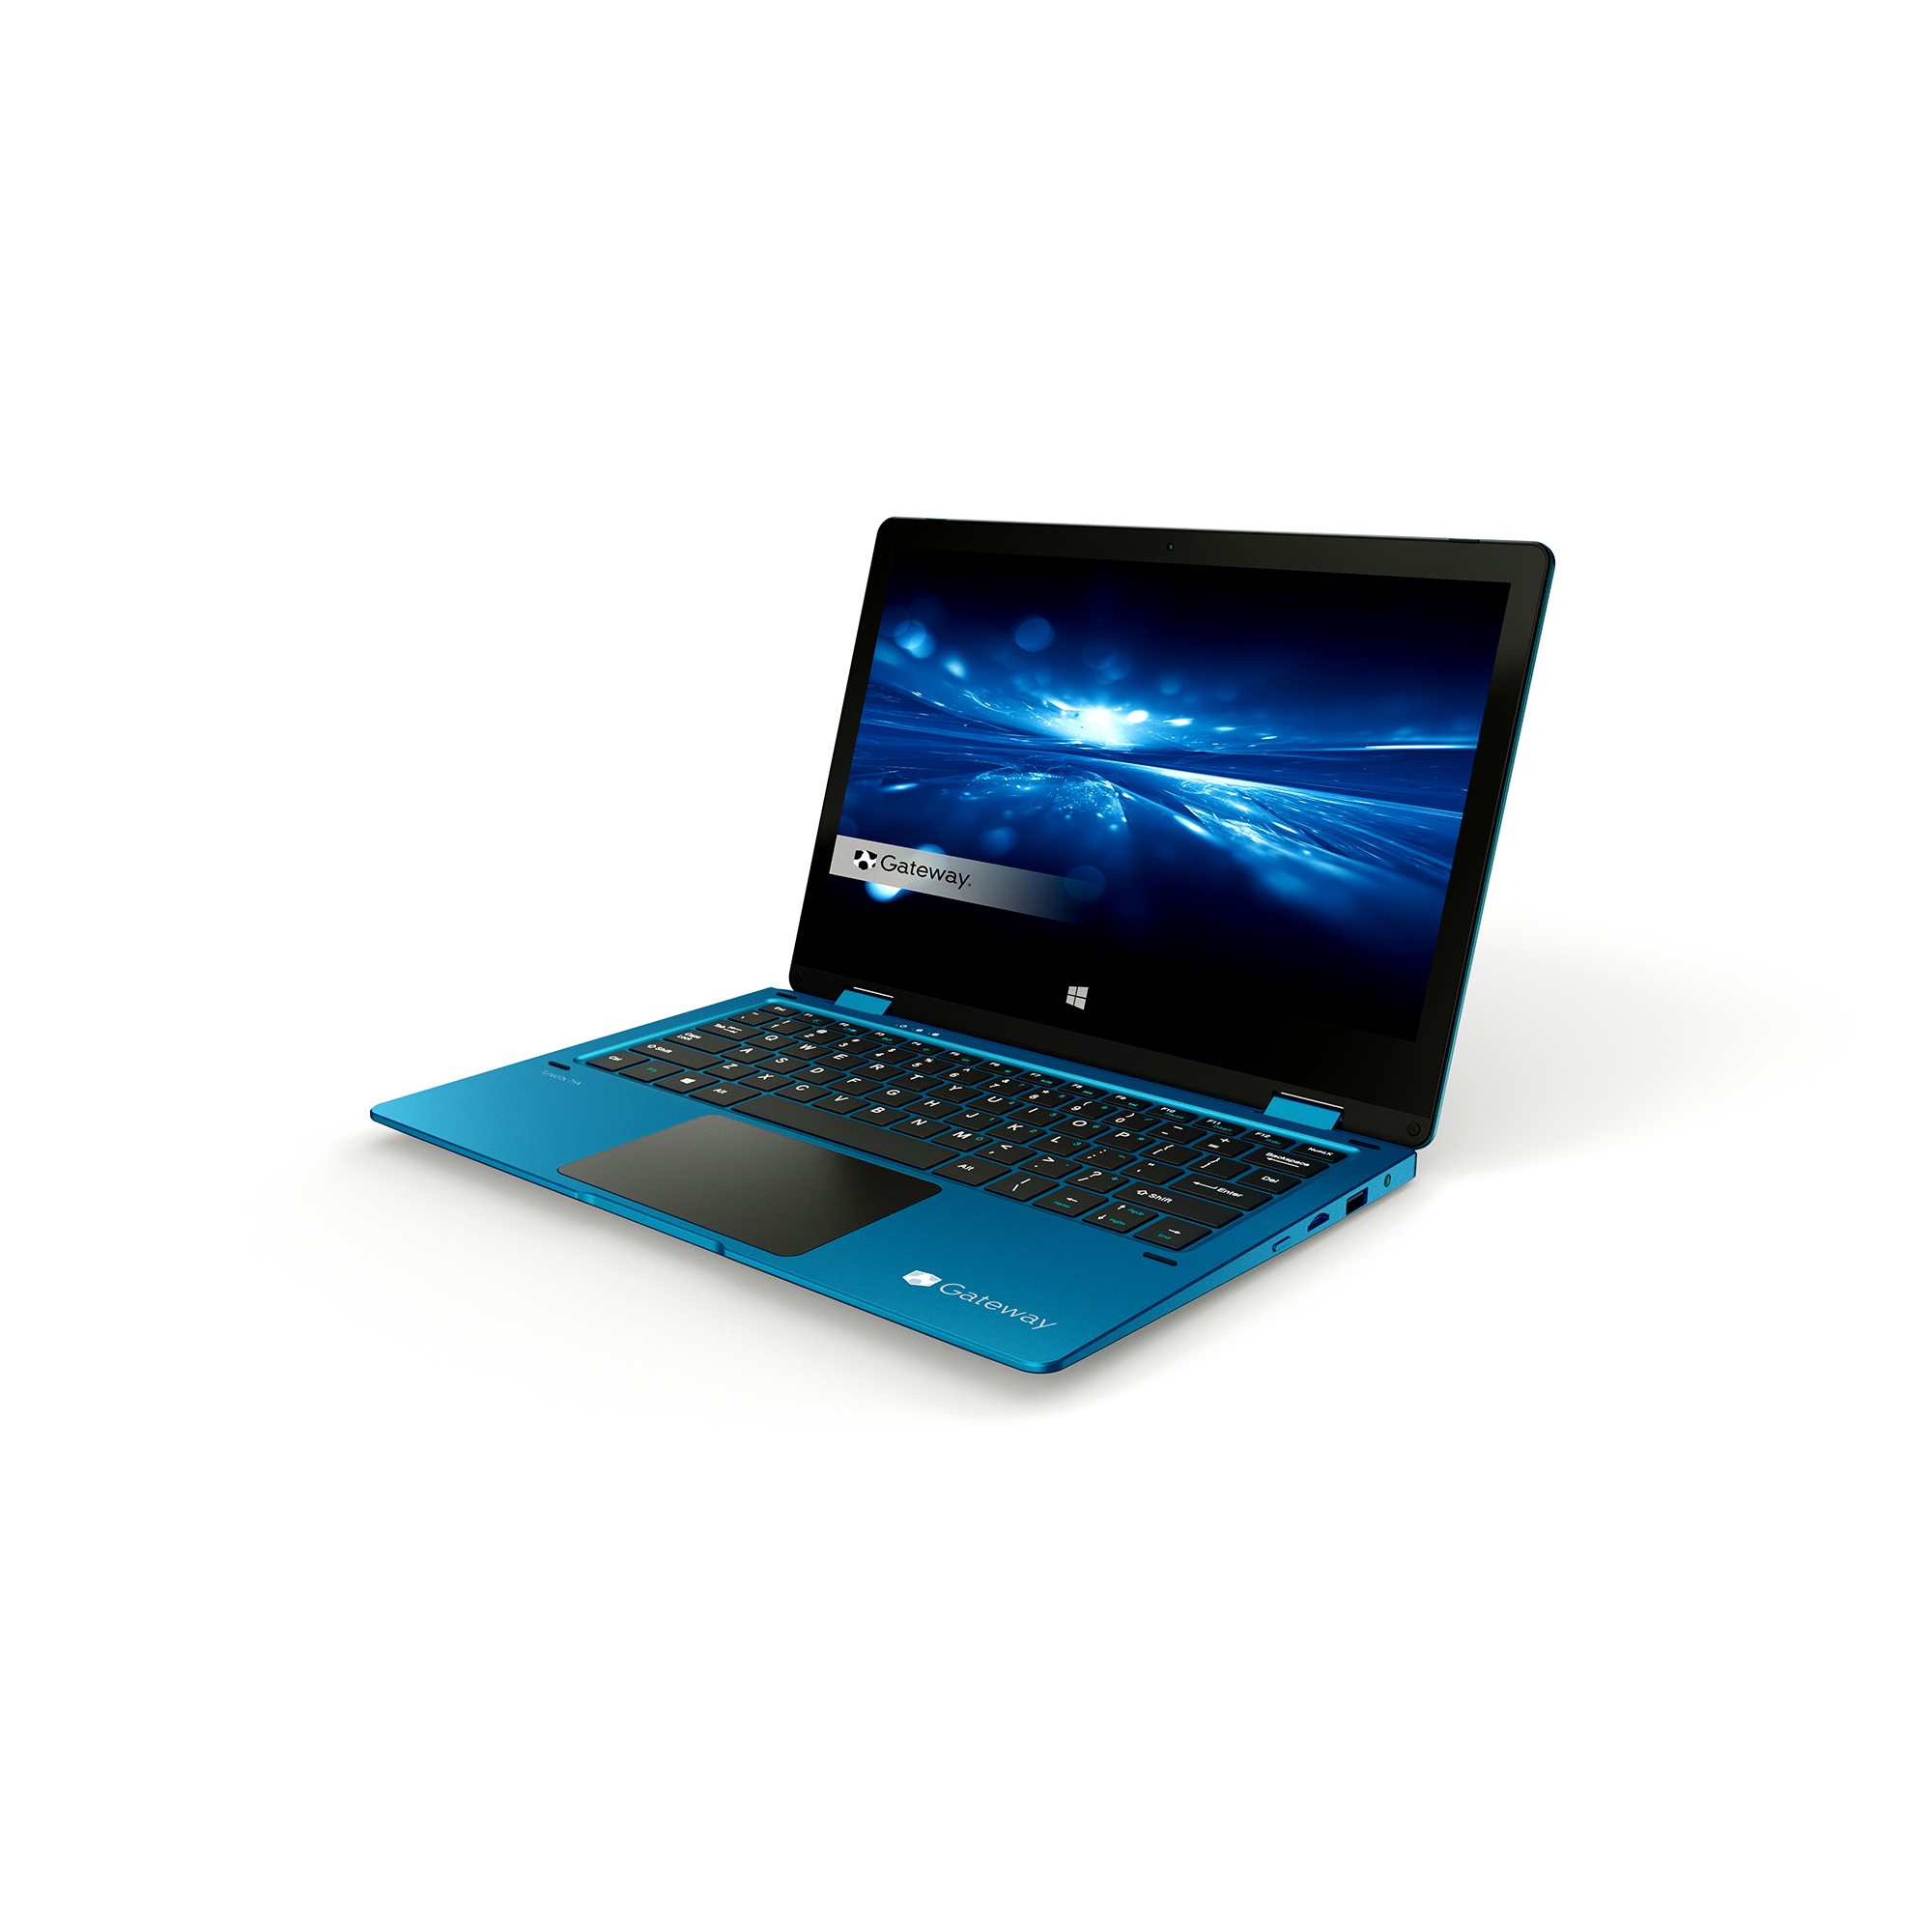 Gateway Notebook 11.6" Touchscreen 2-in-1s Laptop, Intel Celeron N4020, 4GB RAM, 64GB HD, Windows 10 Home, Blue, GWTC116-2BL - image 7 of 8